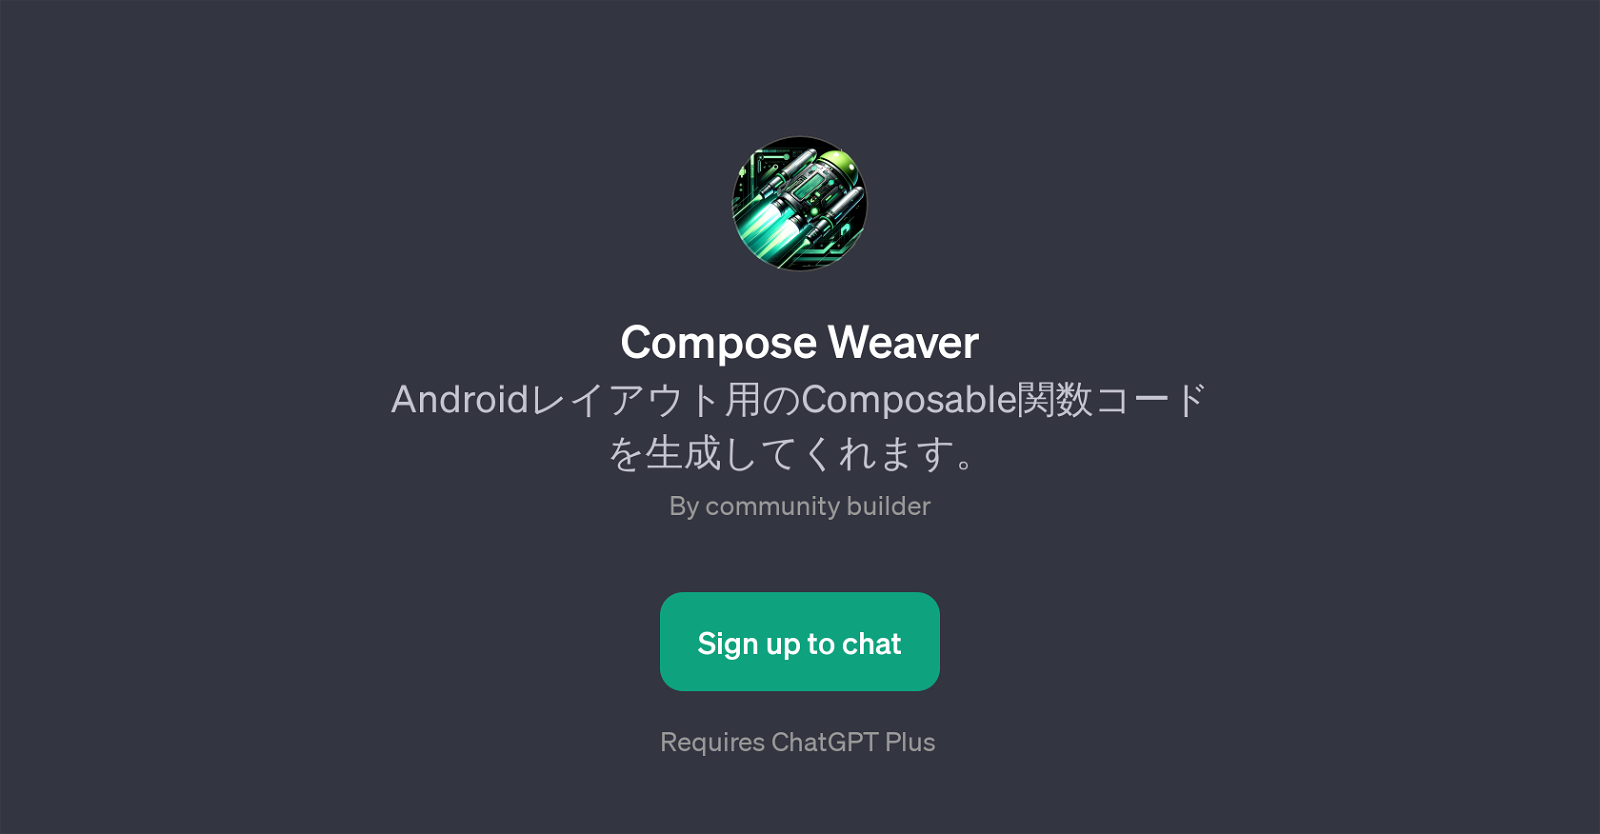 Compose Weaver website